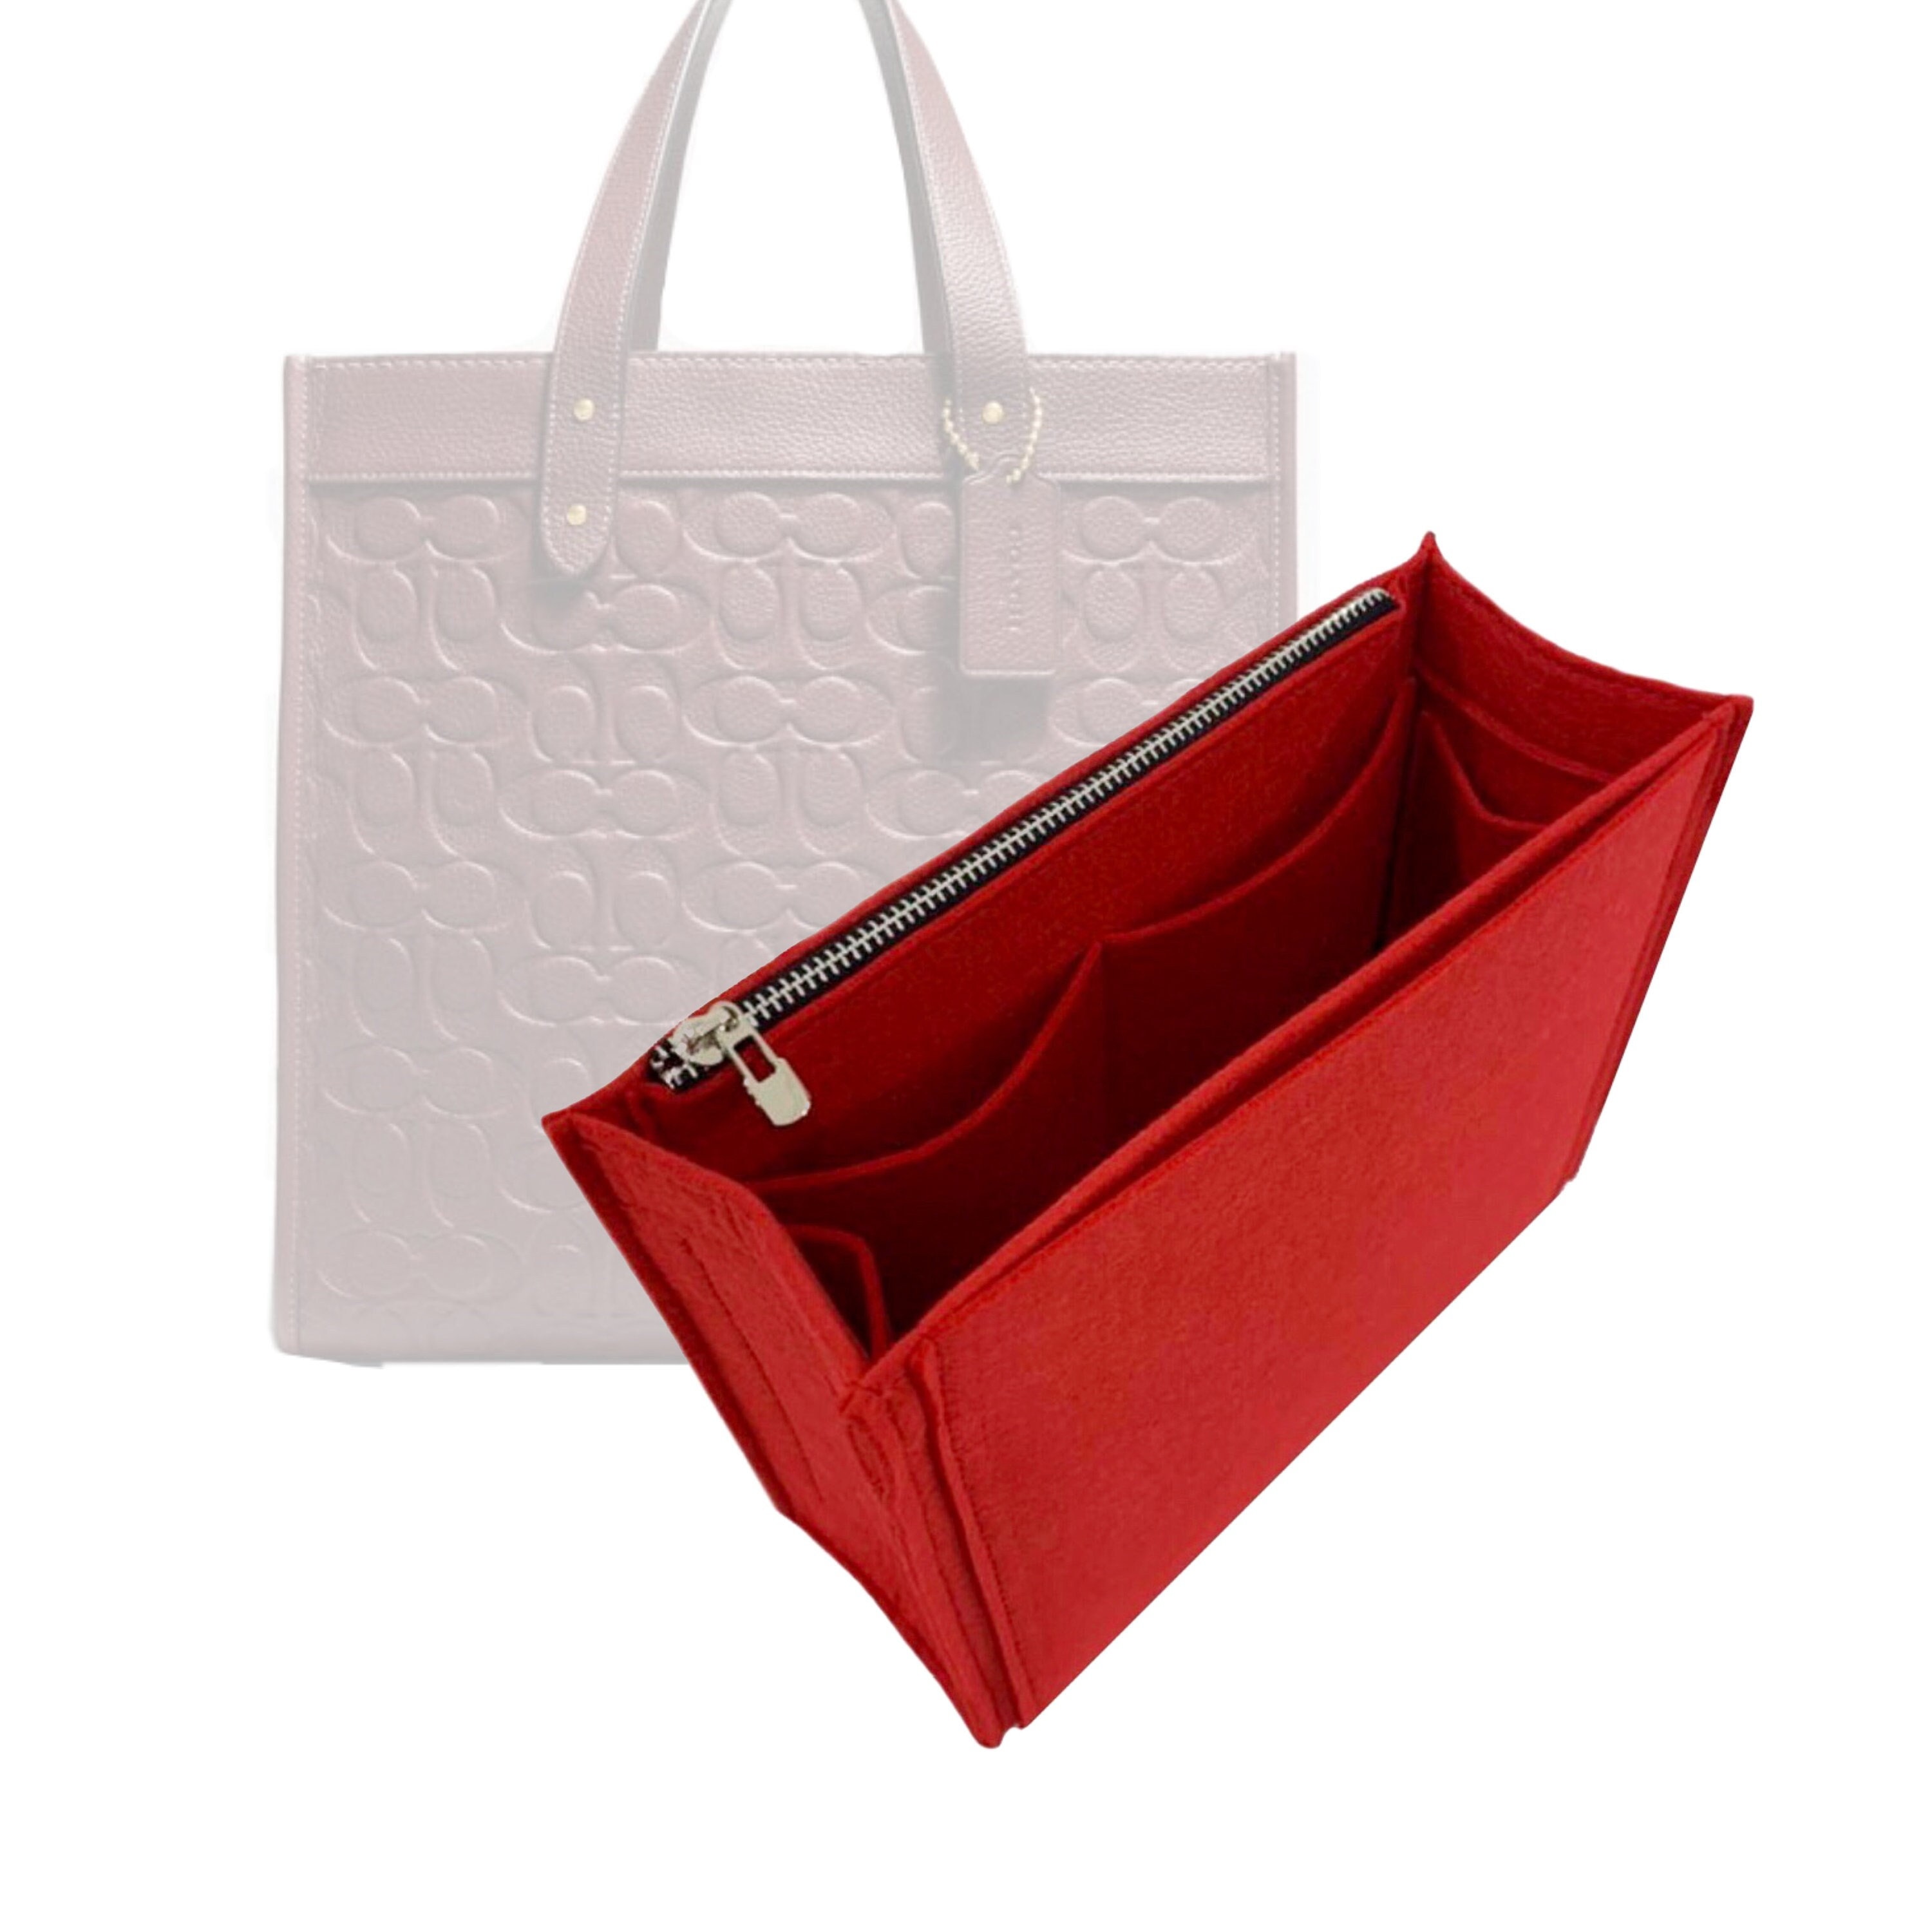  Zoomoni Premium Bag Organizer for Chanel WOC (Wallet on Chain)  (Handmade/20 Color Options) [Purse Organiser, Liner, Insert, Shaper] :  Handmade Products